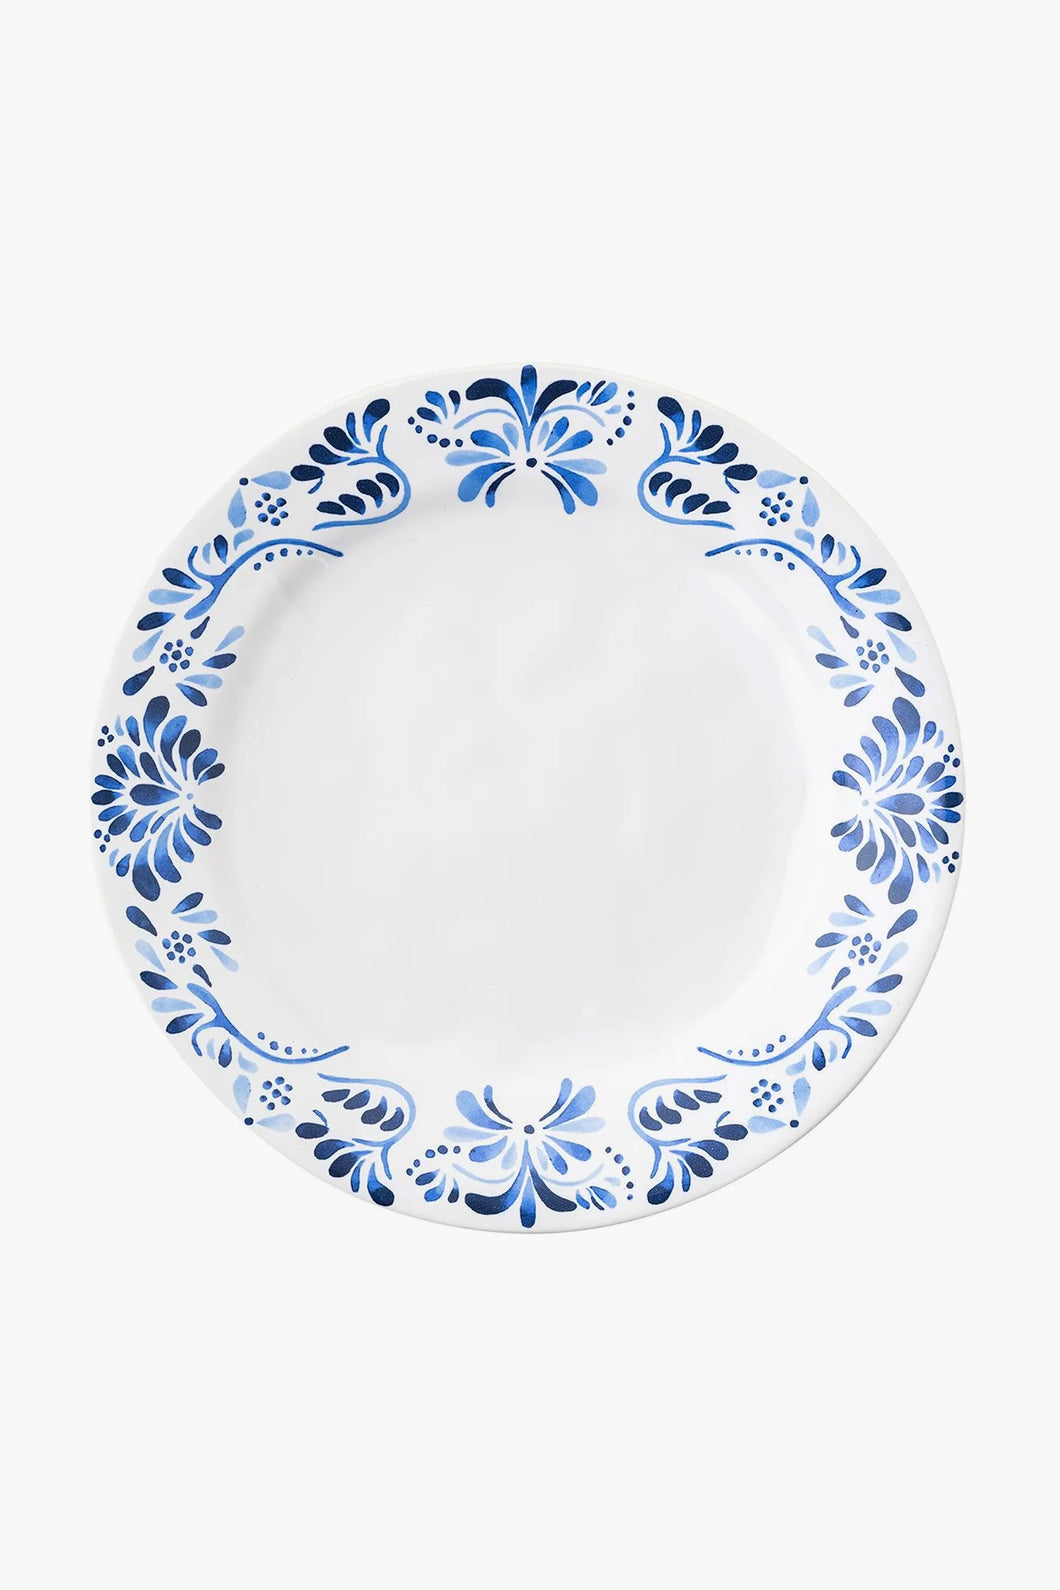 Iberian Dinner Plate - Indigo - Set of 4